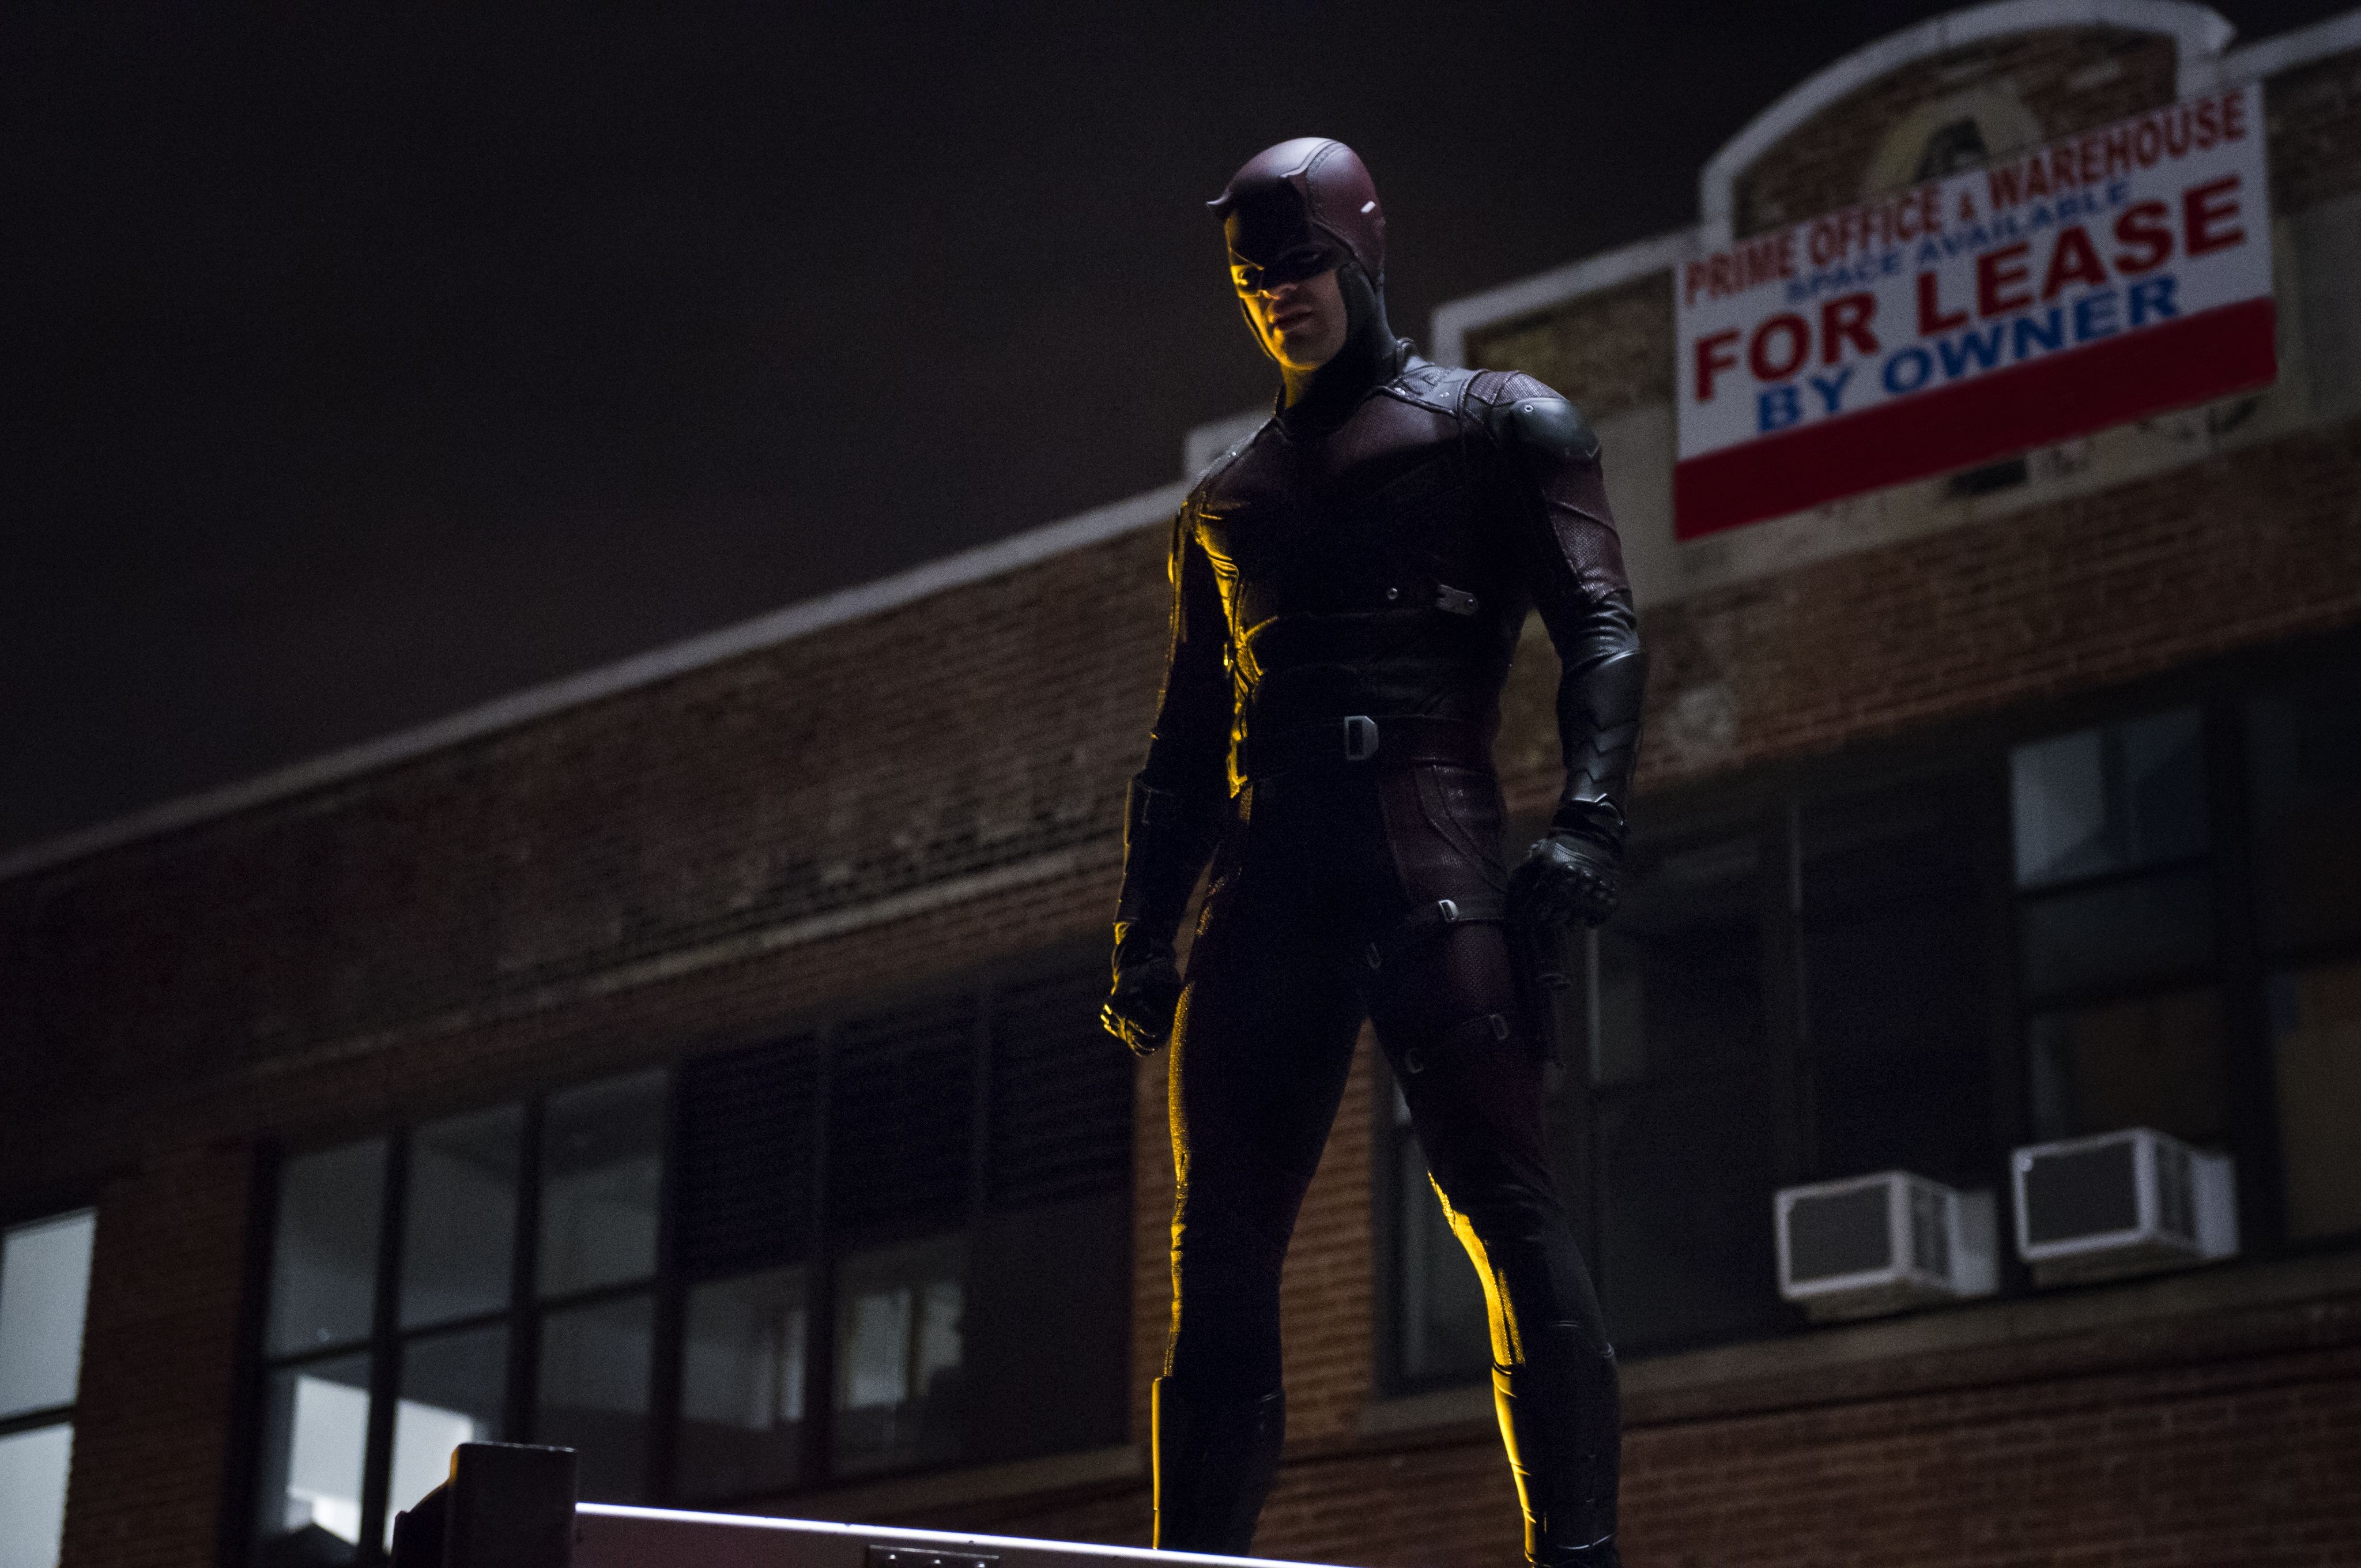 See Netflix's original costume design for Daredevil